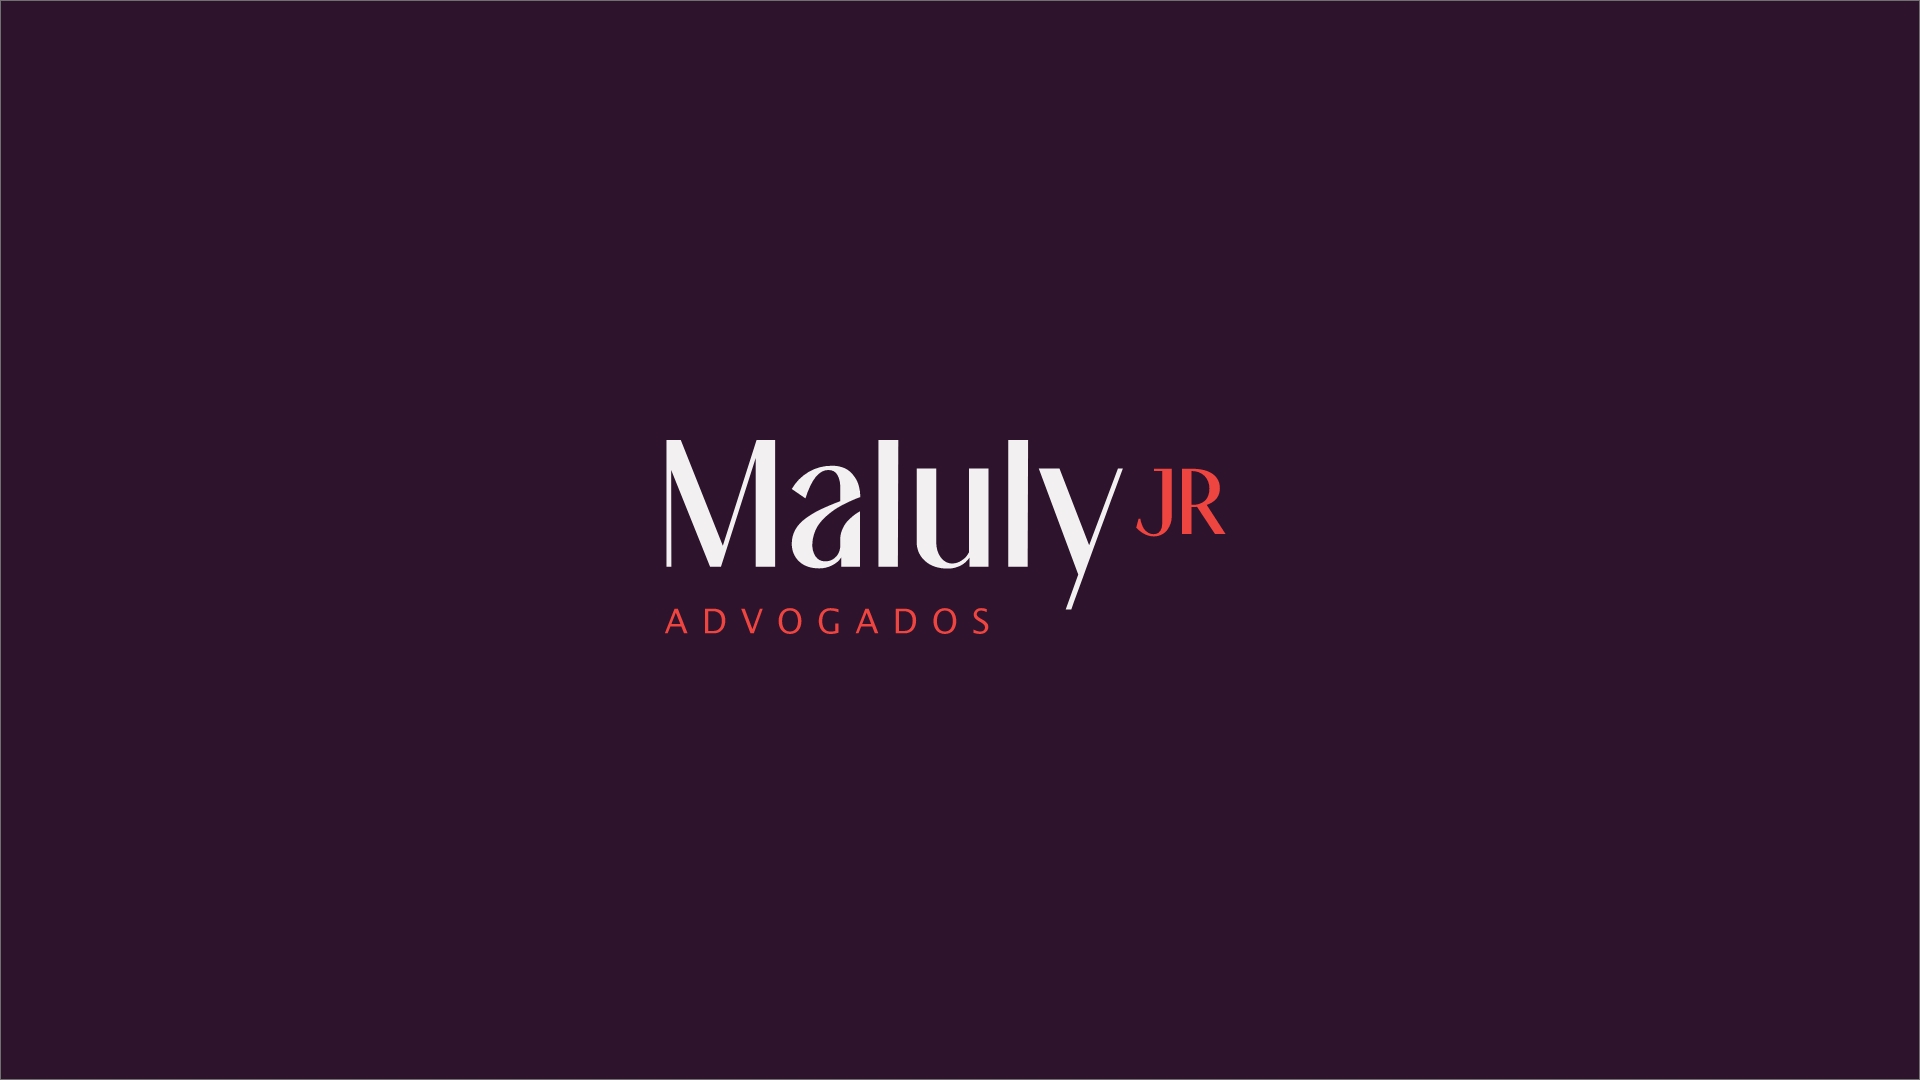 Identidade Visual Maluly JR desenvolvida pela Unitri Design